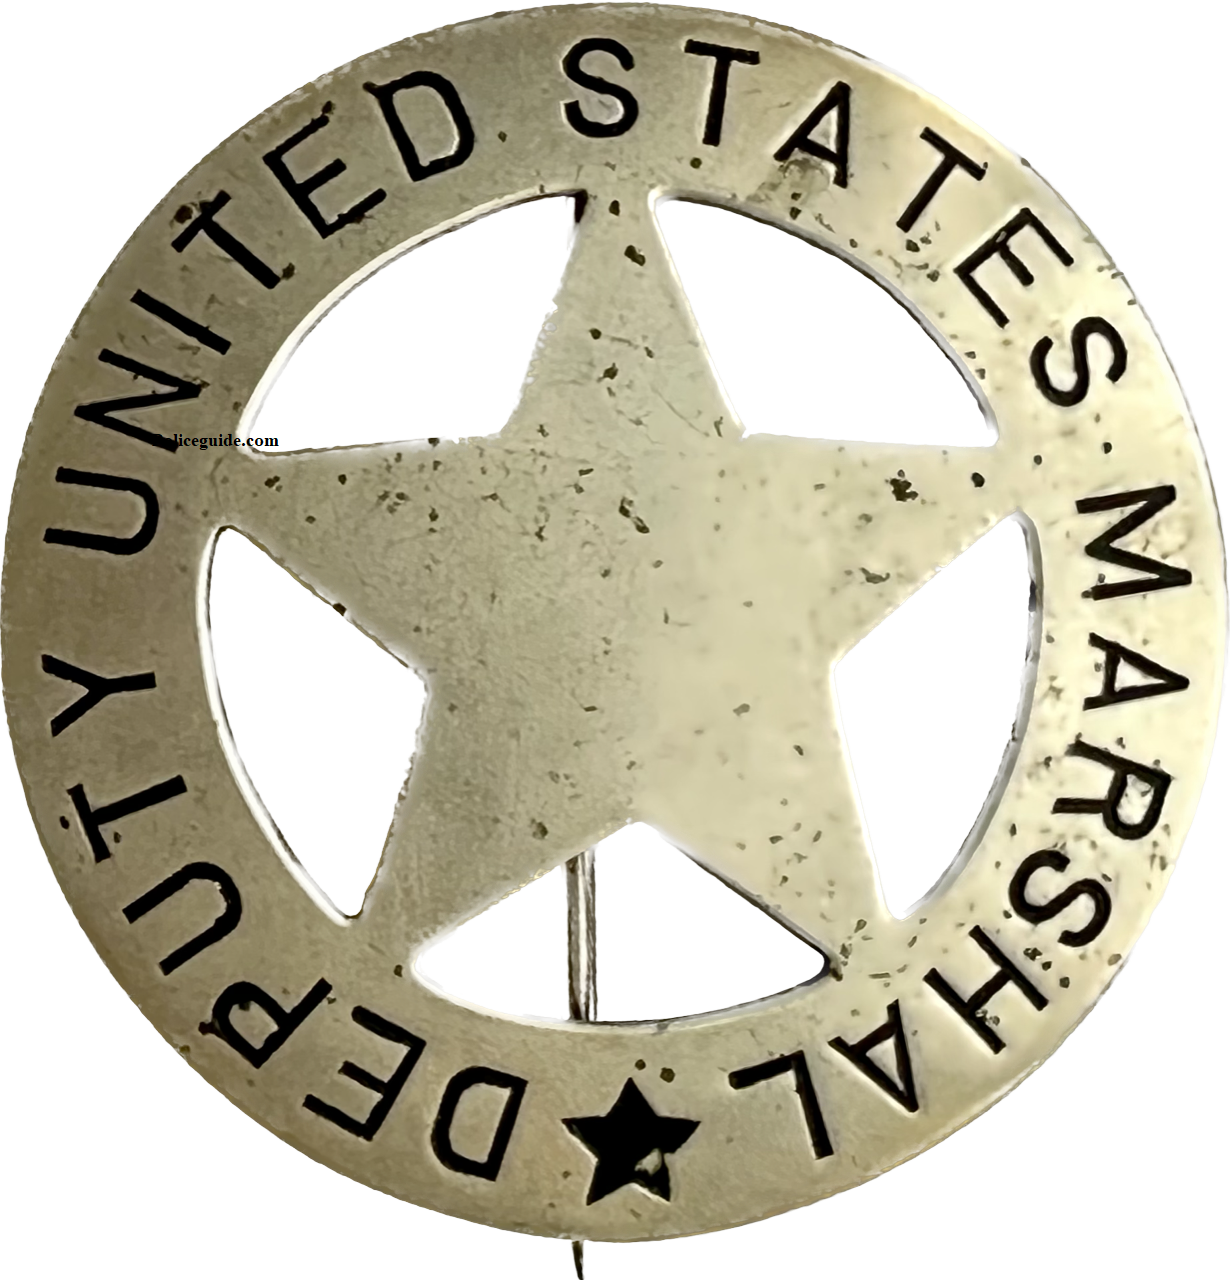 Deputy United States Marshal circle star badge, made by Lamb Seal & Stencil Co. Wash. D.C.